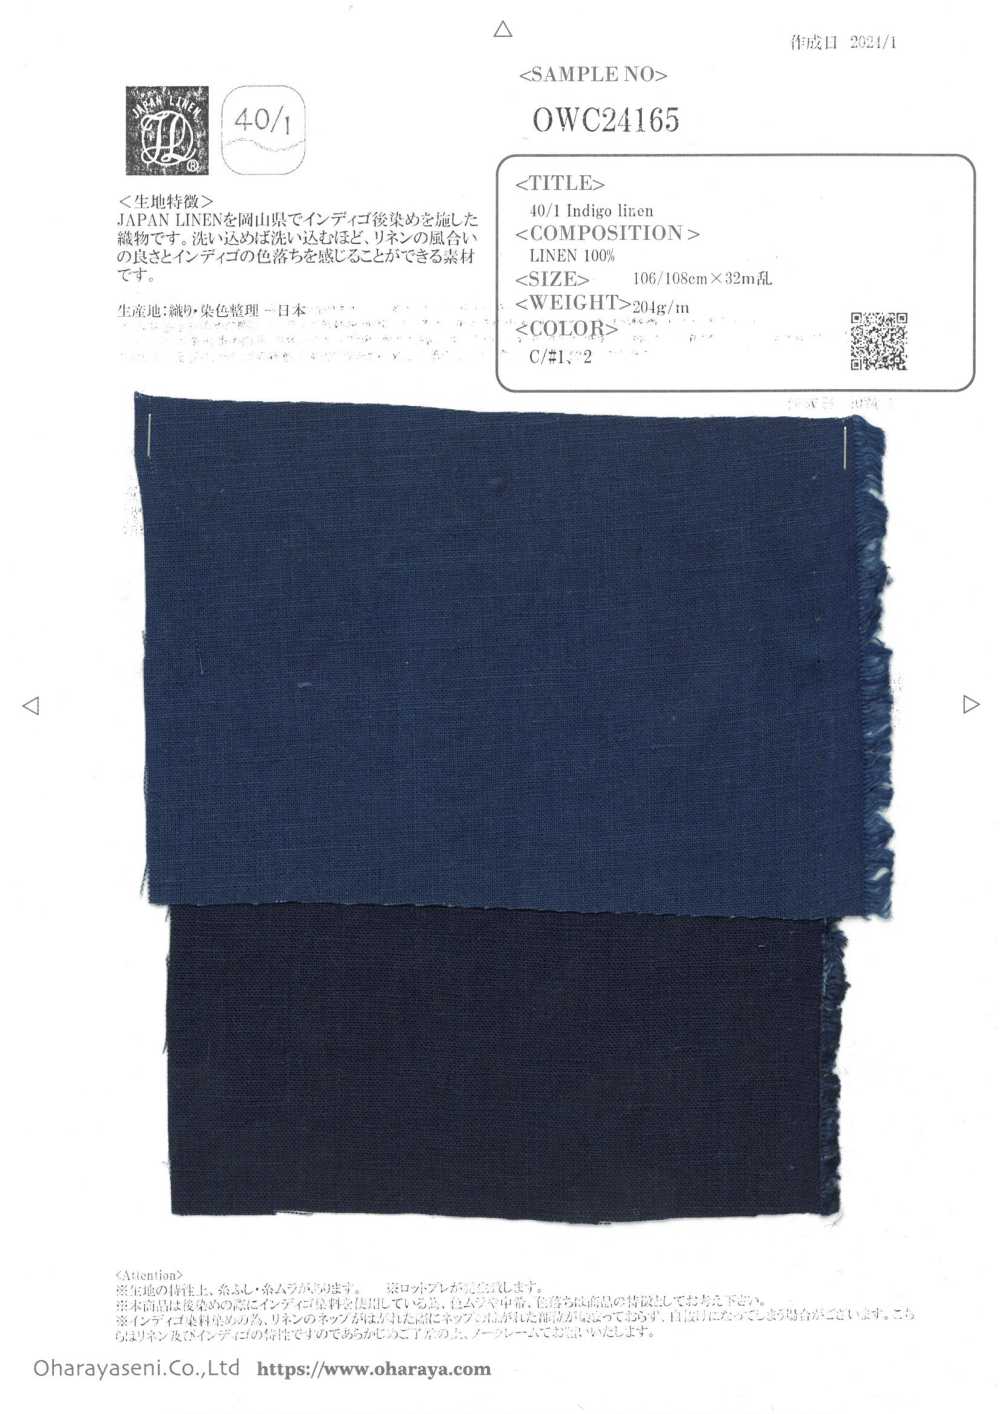 OWC24165 Lin Indigo 40/1[Fabrication De Textile] Oharayaseni